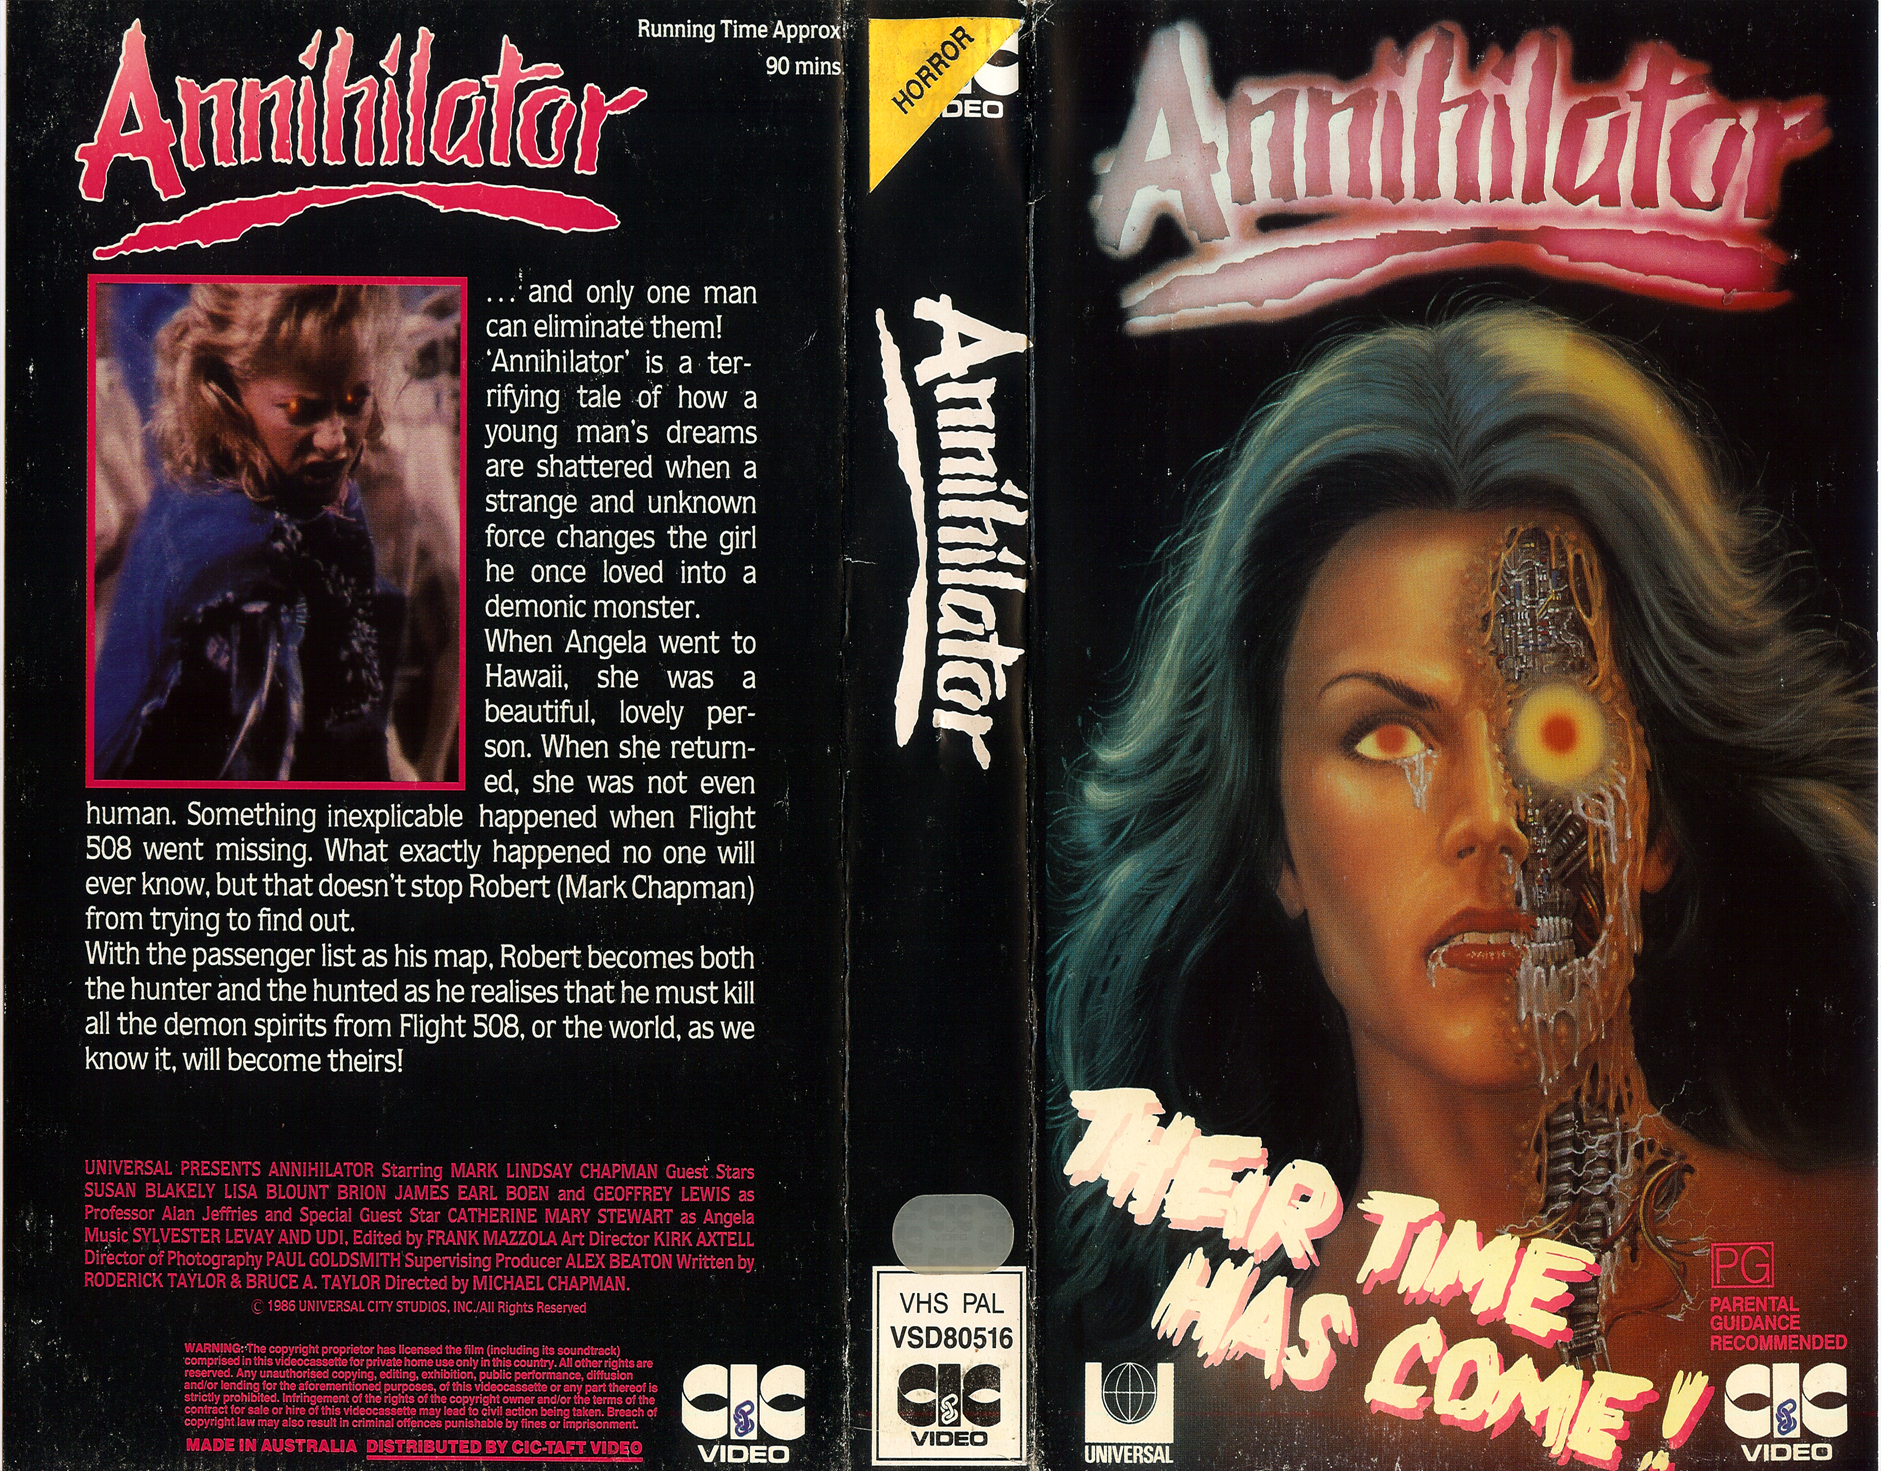 The Annihilator movie